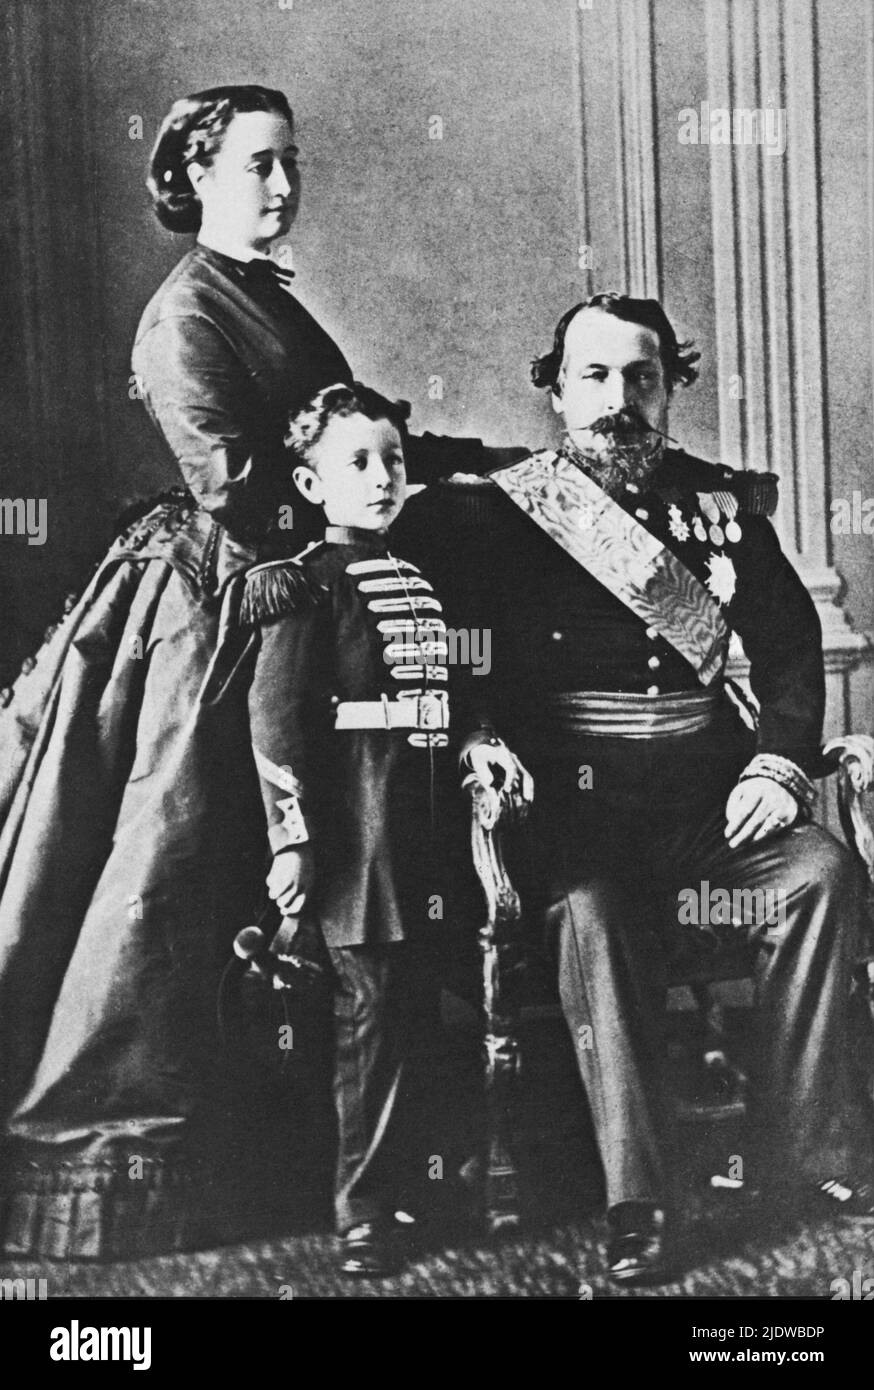 1865 ca., FRANCE :  The french Emperor NAPOLEON III ( 1808 - 1873  , son of Louis BONAPARTE and Ortensia Beauharnais ) with wife Empress Eugénie ( Eugenia de Montijo de Guzman - 1826 - 1920 ) and son the Imperial Prince Eugéne Louis Napoléon  ( 1856 - 1879 ).  - REALI - royalty - nobili - nobiltà - Napoleone III - imperatrice  -  imperatore - baffi - moustache - ritratto - baffi - moustache - beard - barba - medaglia - medaglie - medails - military decorations - RISORGIMENTO - family - famiglia - padre madre e figlio - mother and housband   ----  Archivio GBB Stock Photo